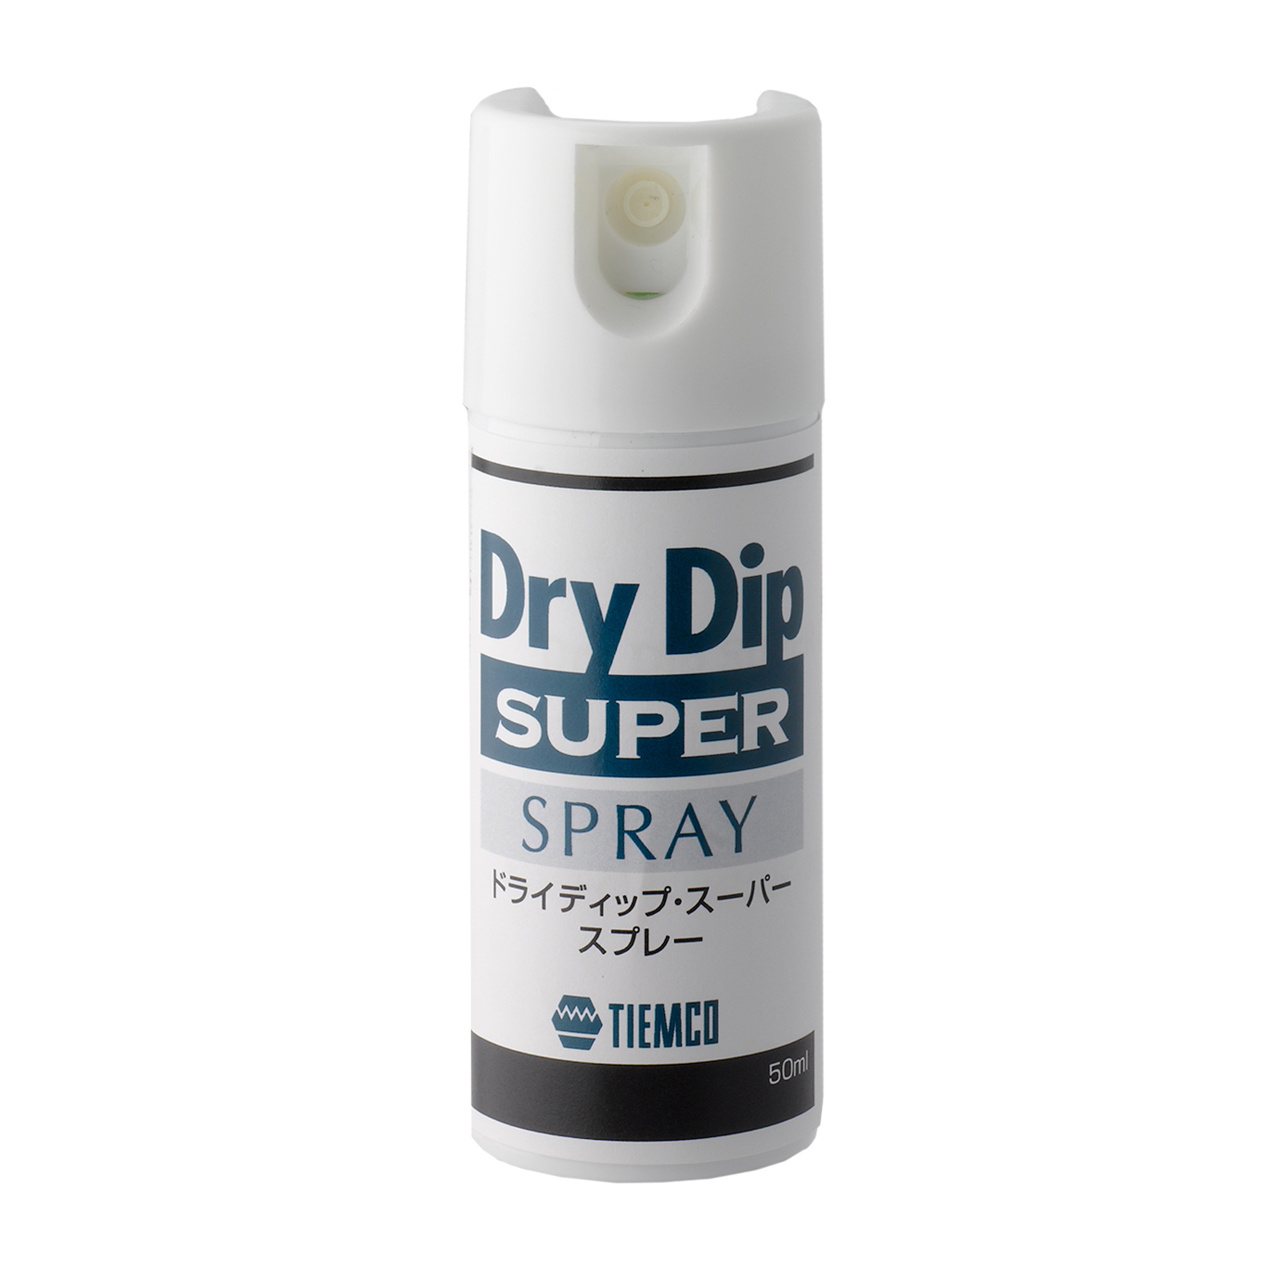 TIEMCO Dry Dip Super for fly-fishing